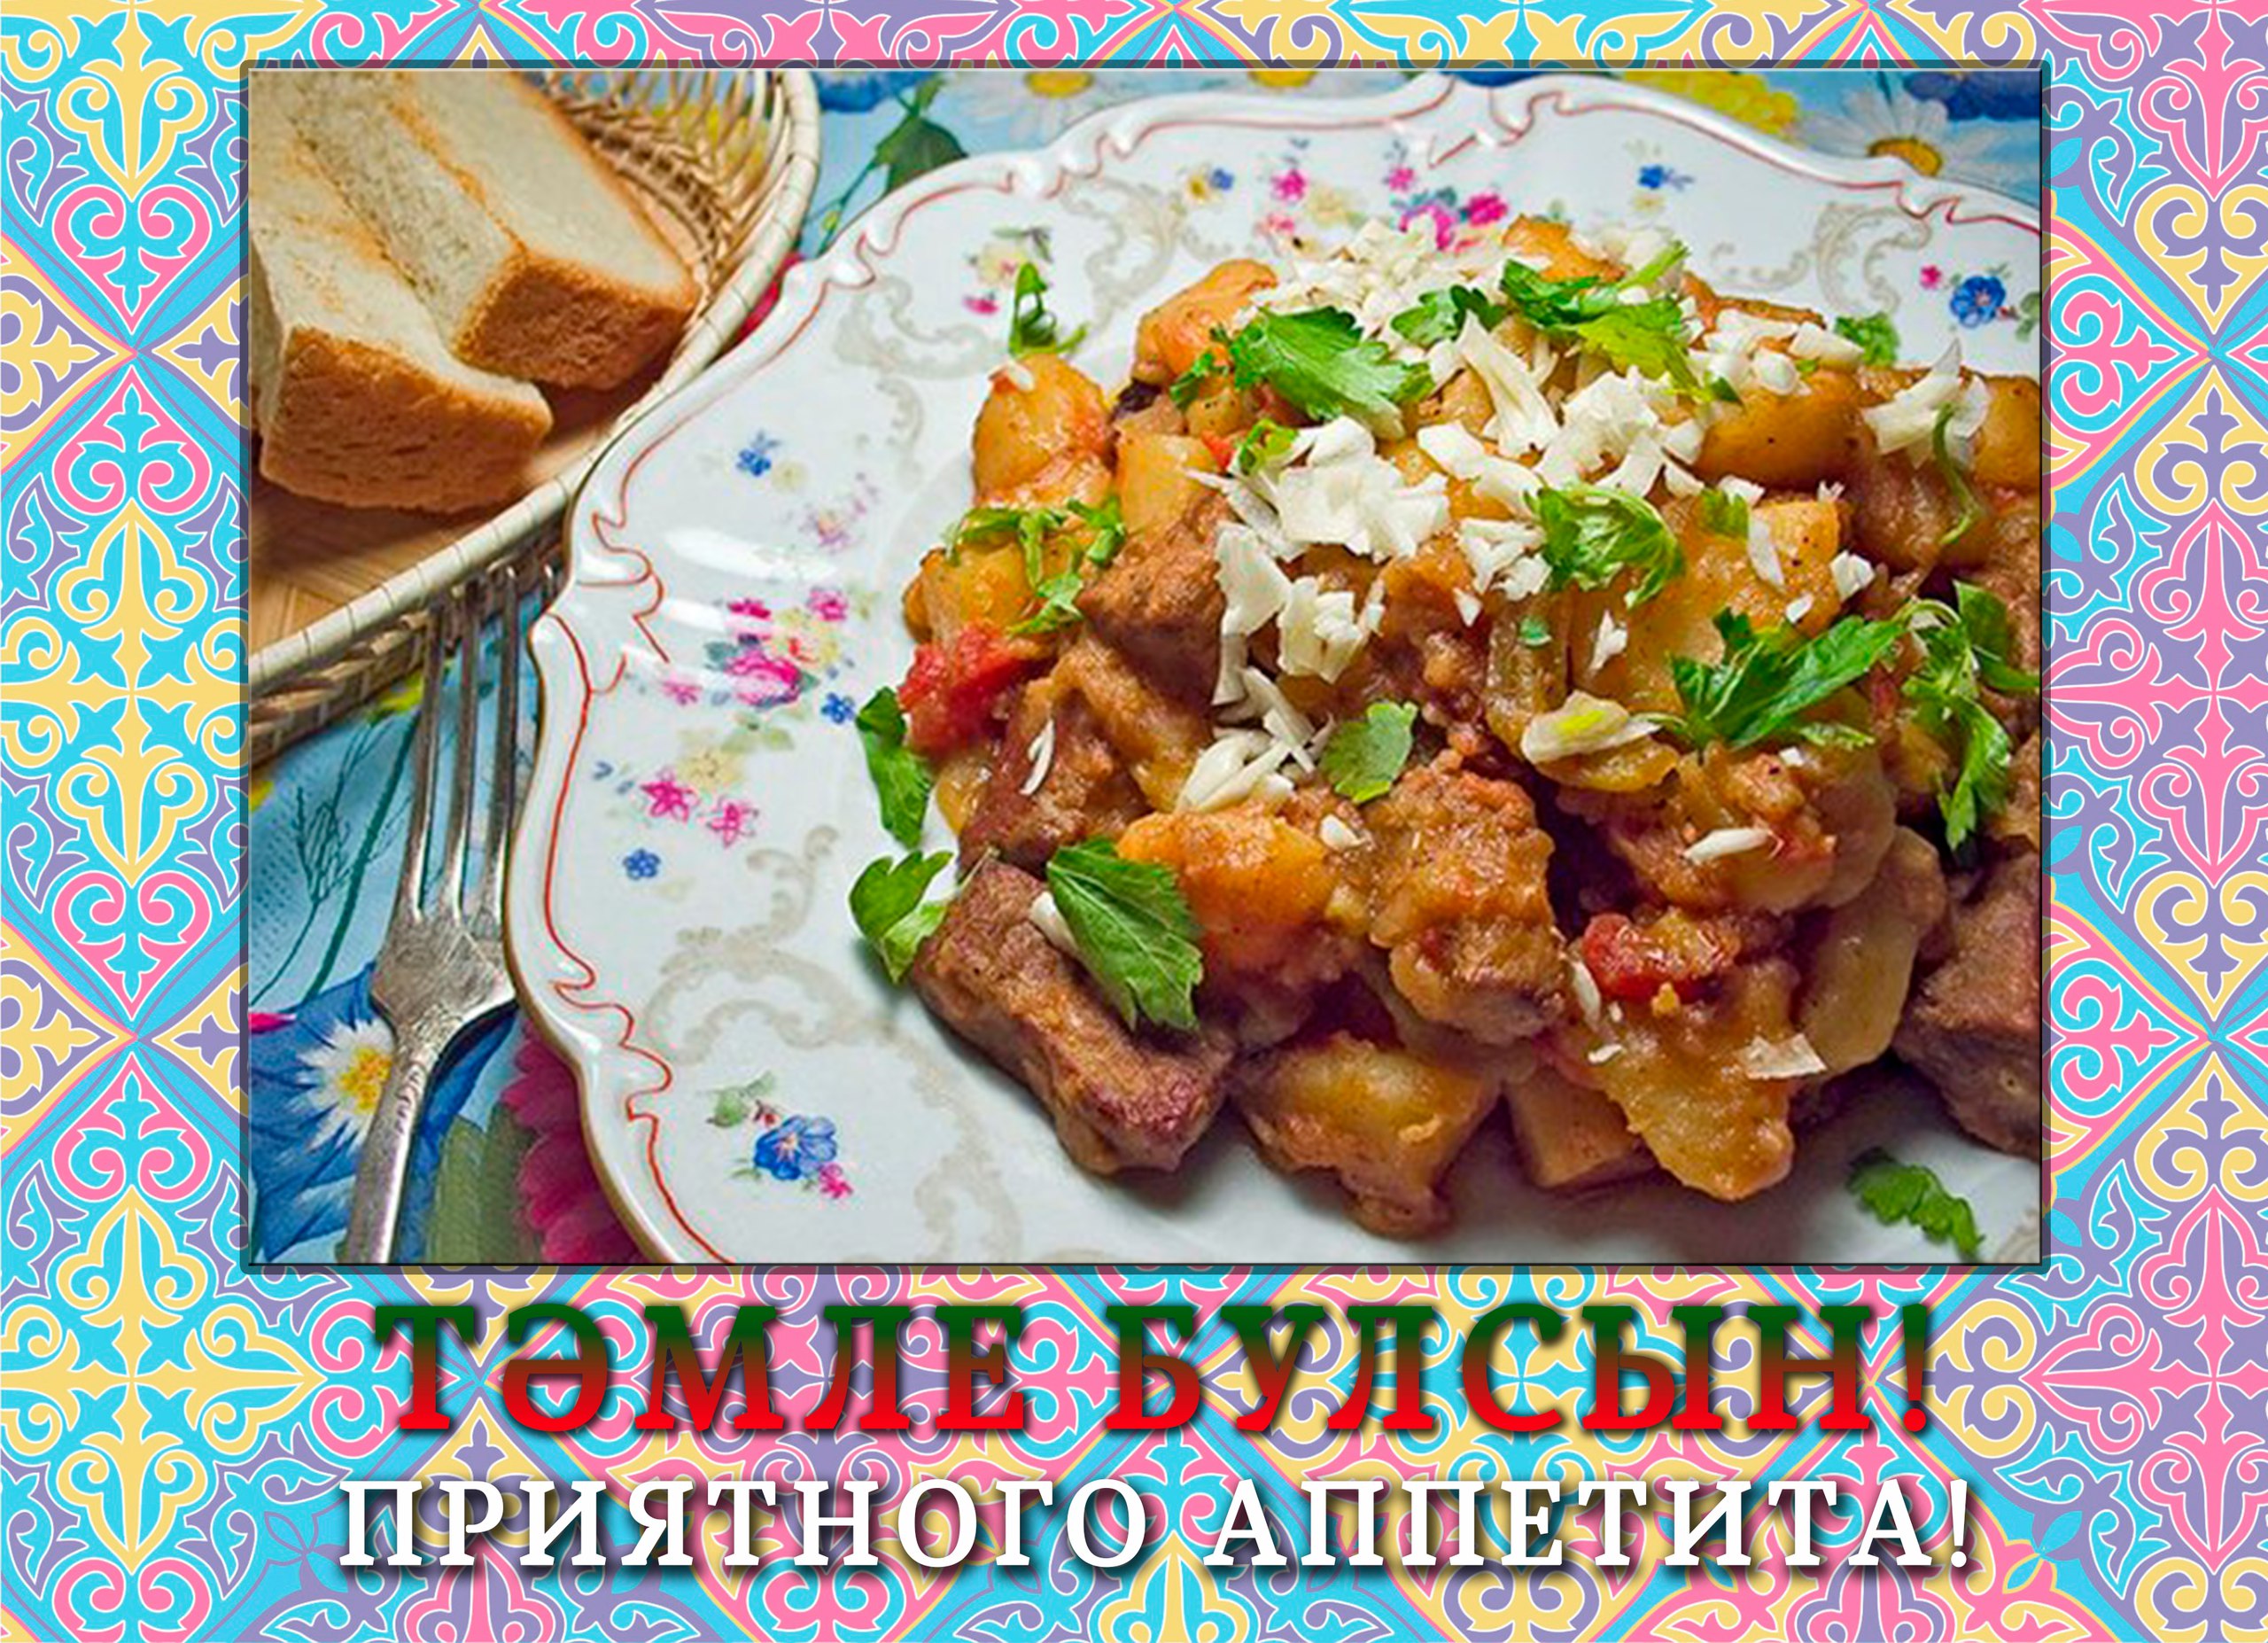 Приятного аппетита читать. Приятного аппетита. Приятного аппетита по татарски. Открытки приятного аппетита. Приятного аппетита на татарском языке.